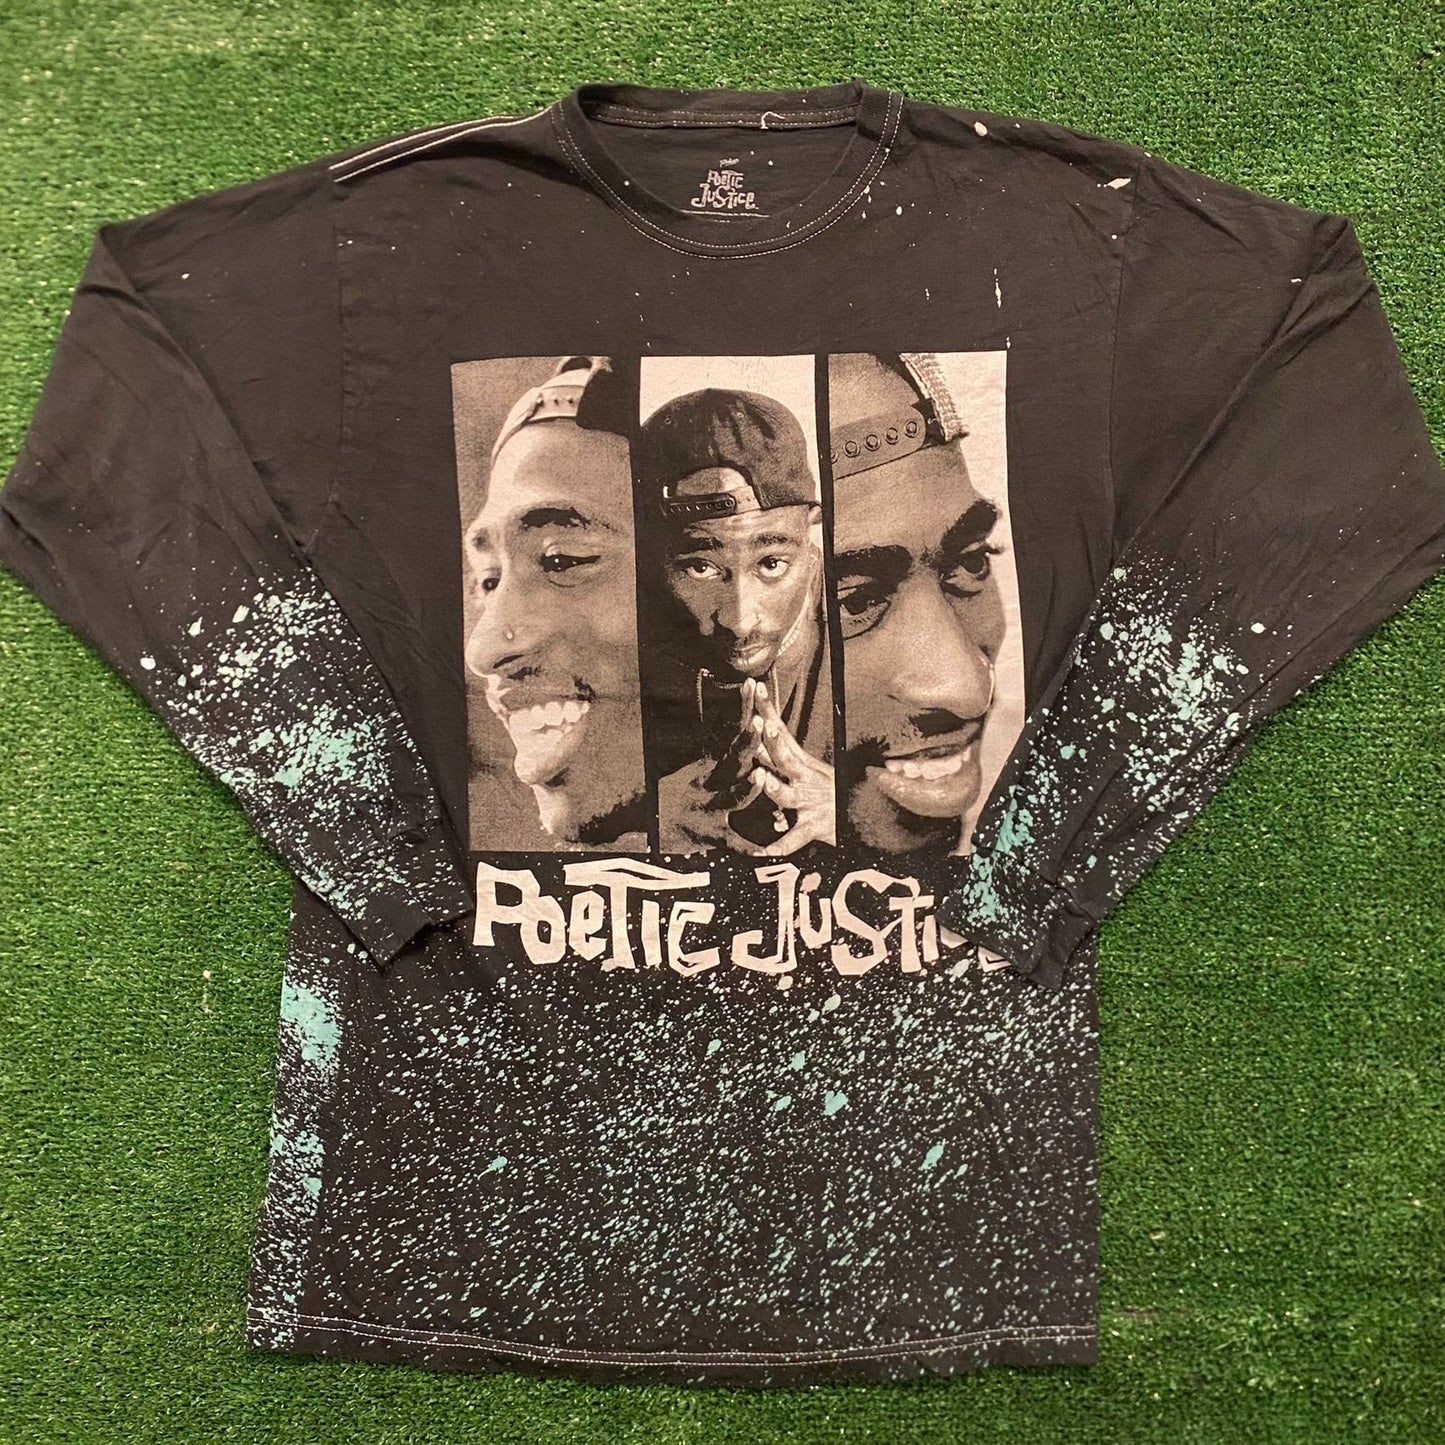 Tupac T-shirt Poetic Justice T-shirt 2pac Shirt Rap Shirt 